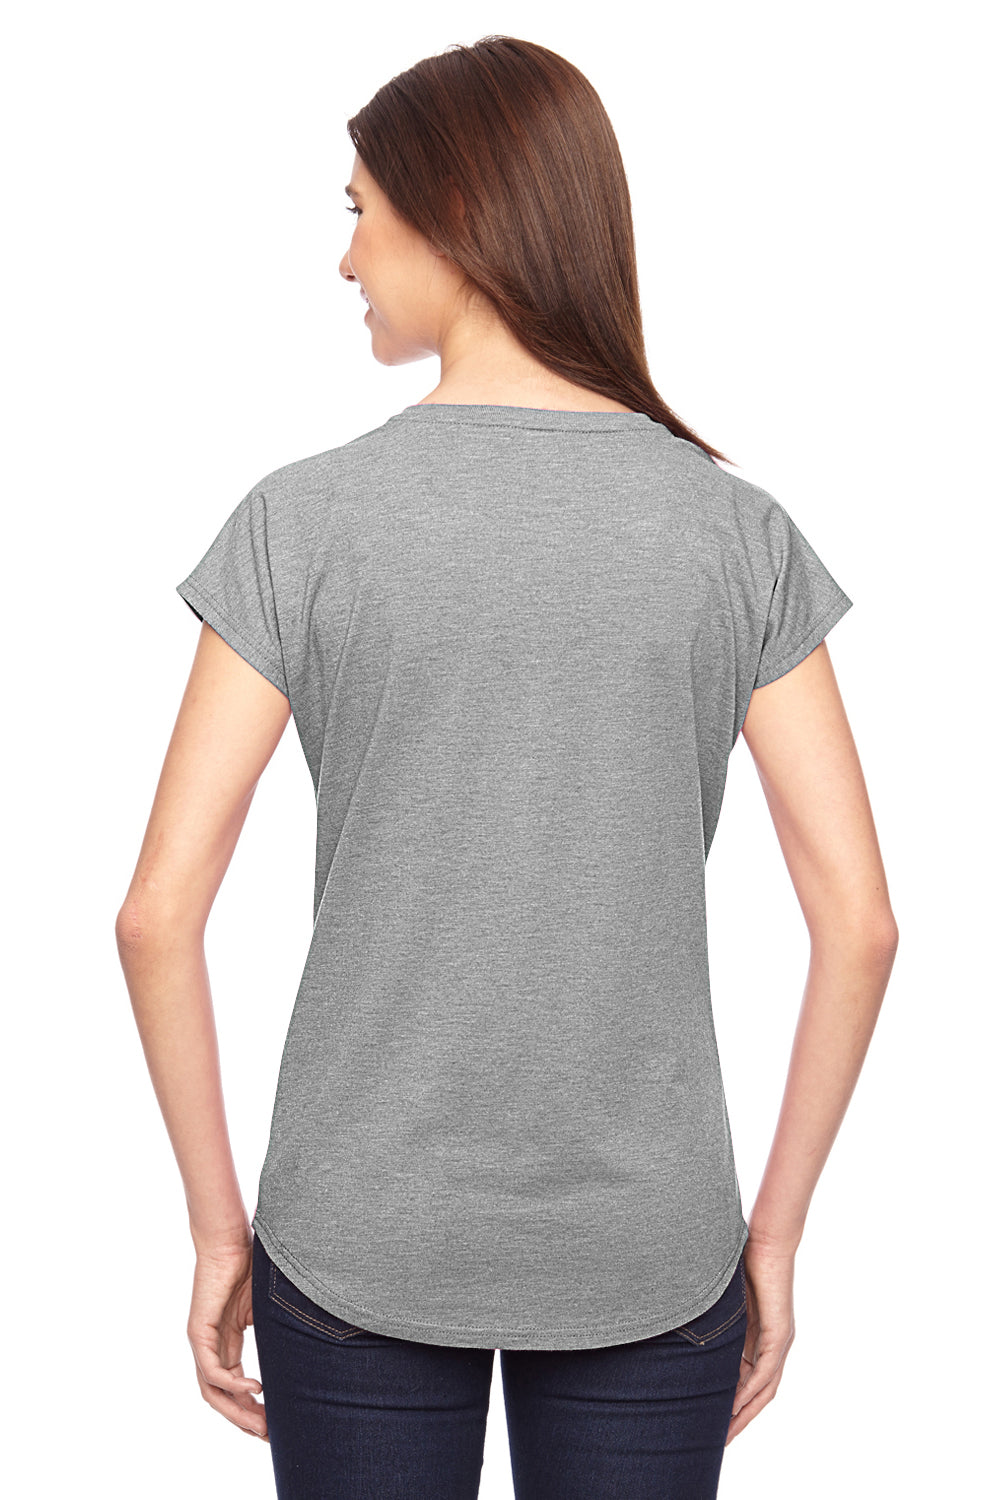 Anvil 6750VL Womens Short Sleeve V-Neck T-Shirt Heather Grey Back